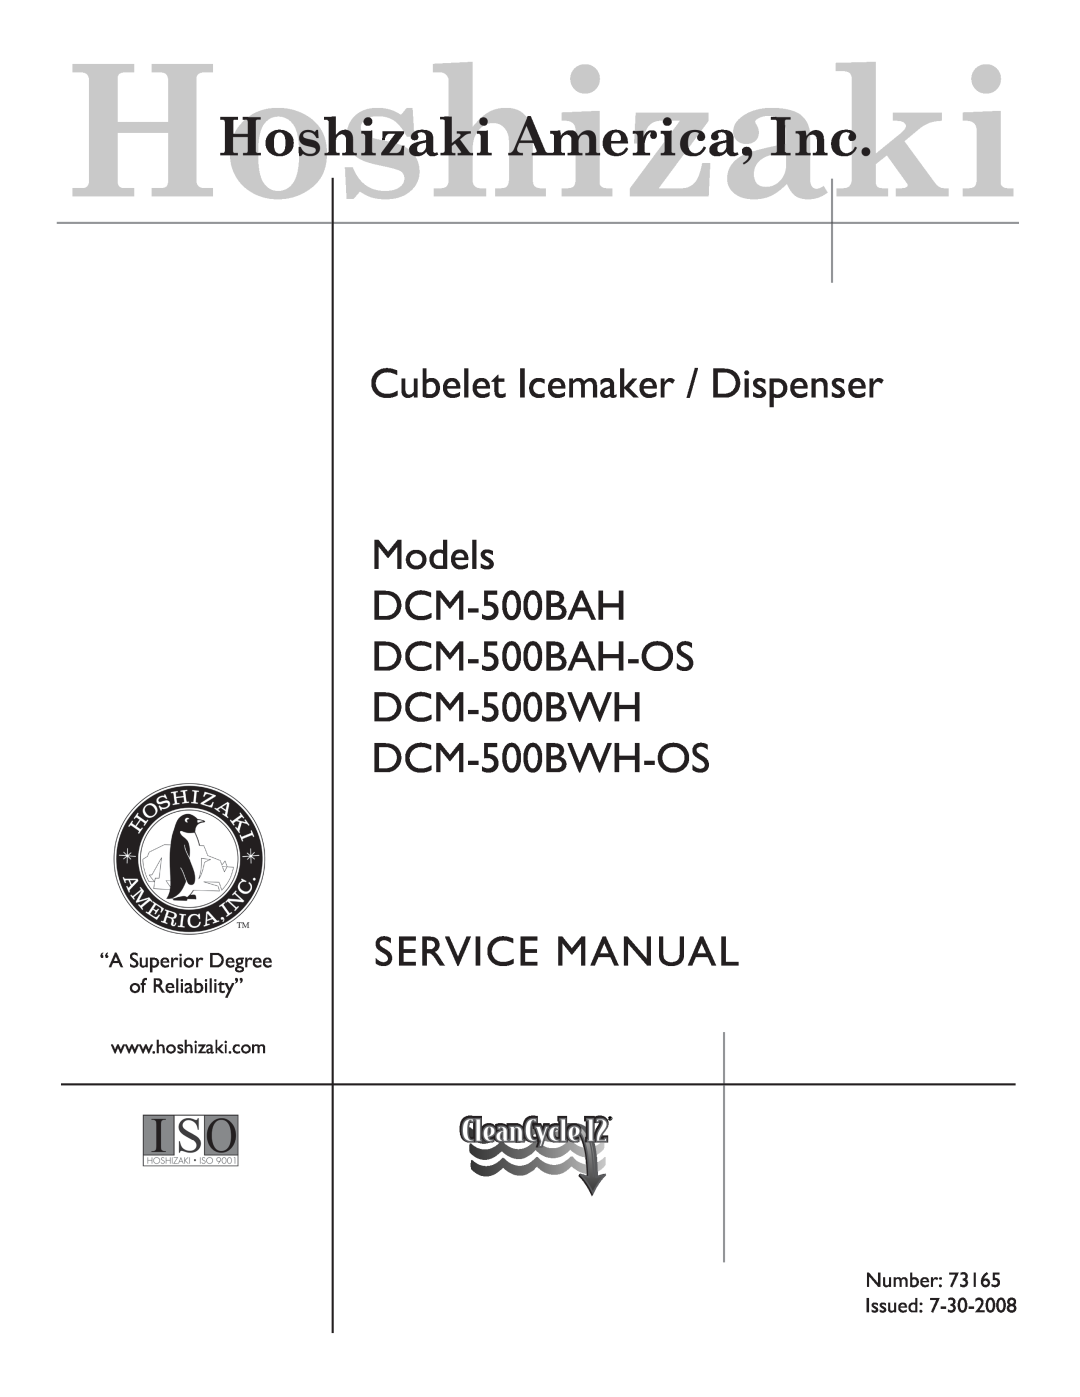 Hoshizaki DCM-500BWH-OS service manual Cubelet Icemaker / Dispenser Models DCM-500BAH, HoshizakiHoshizaki America, Inc 